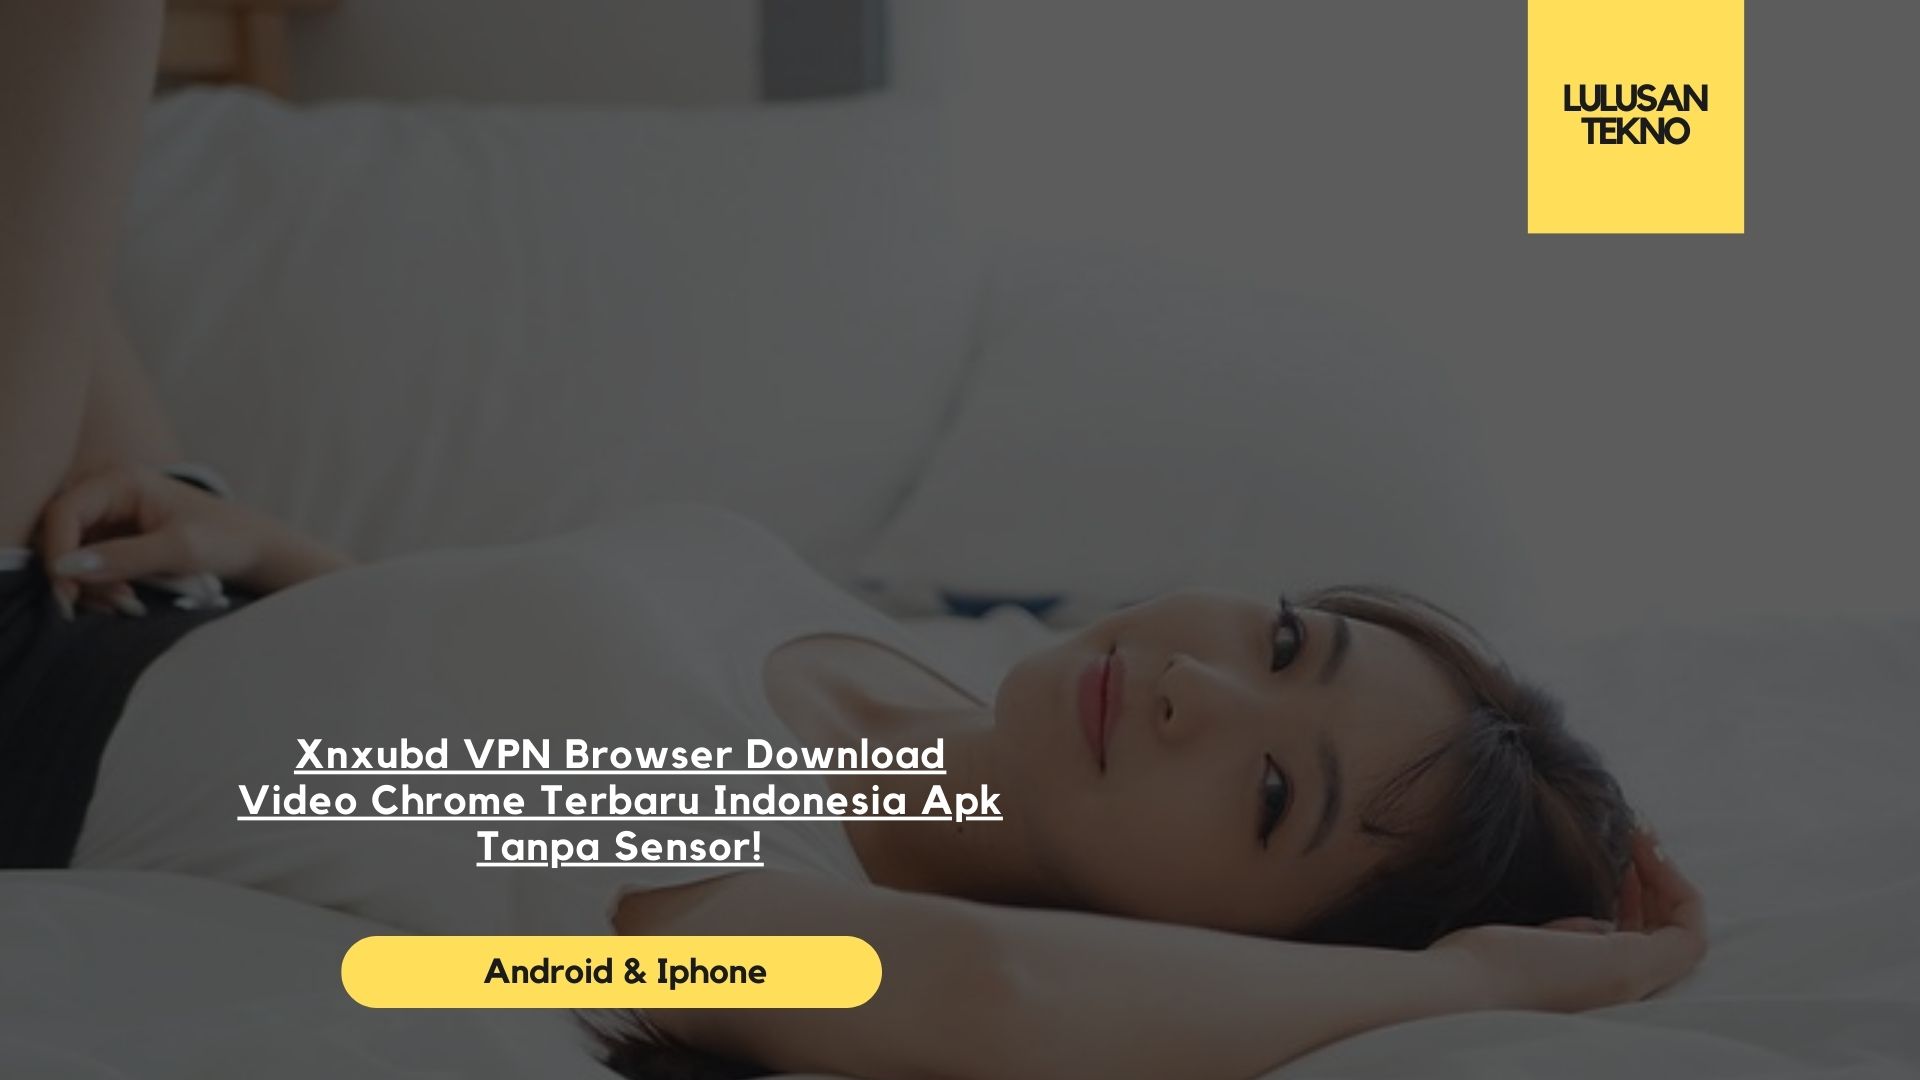 Xnxubd VPN Browser Download Video Chrome Terbaru Indonesia Apk Tanpa Sensor!